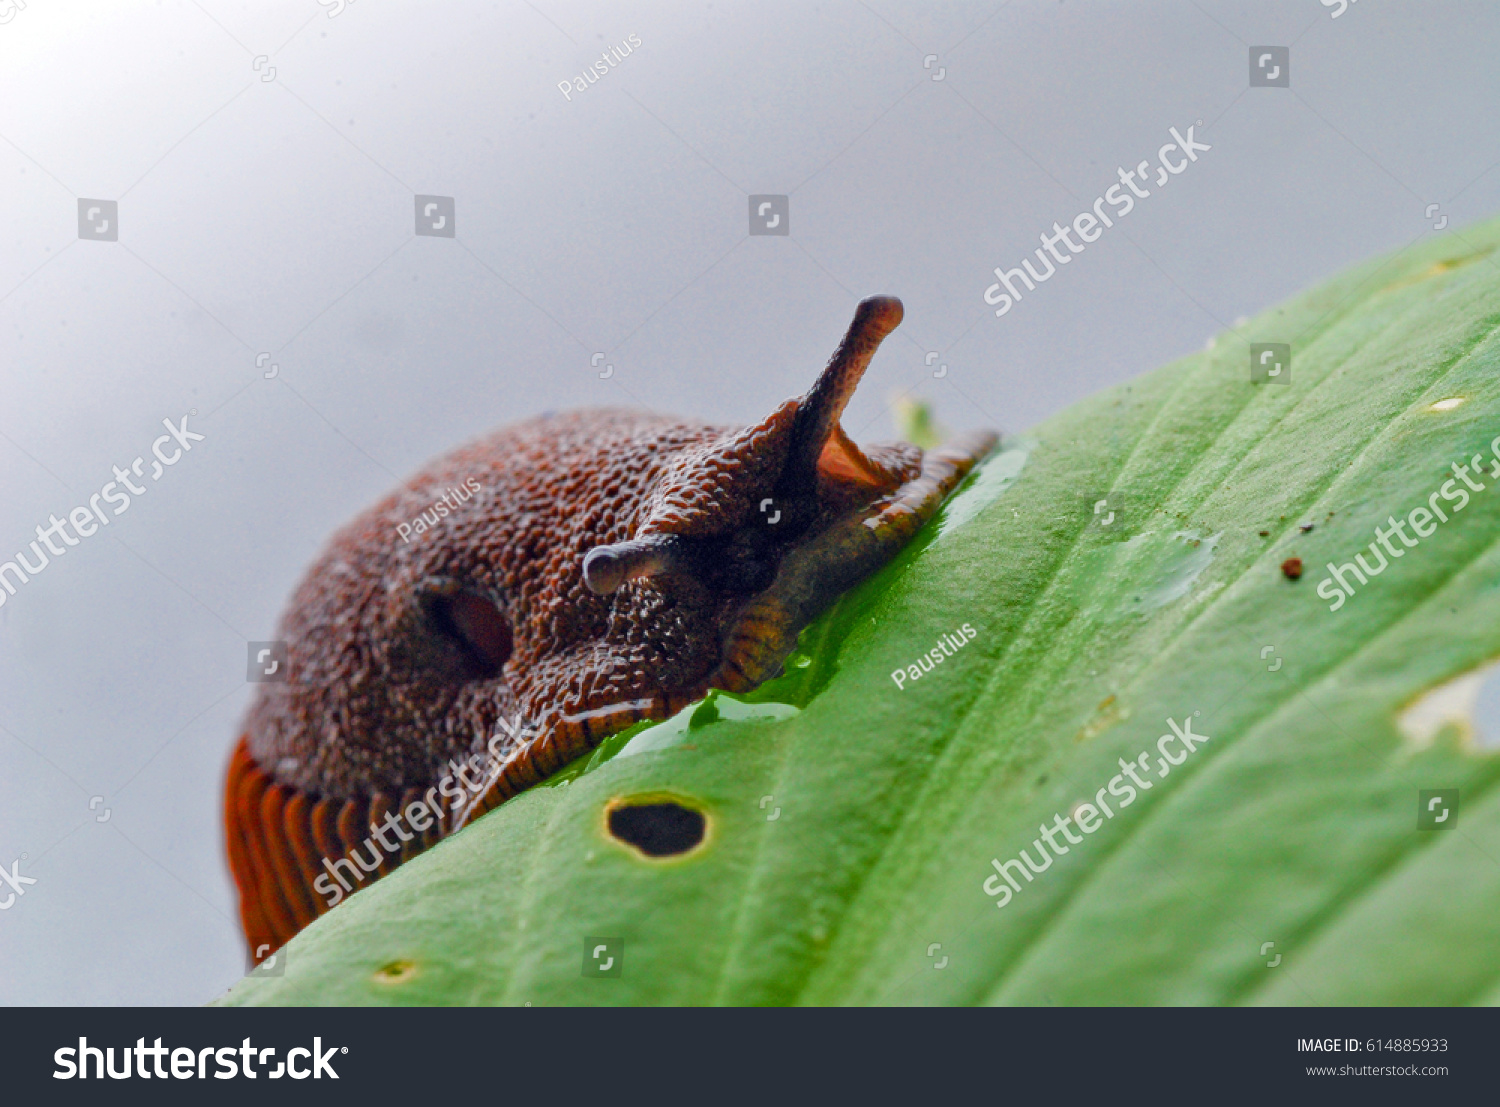 round back slug munching leaf #614885933